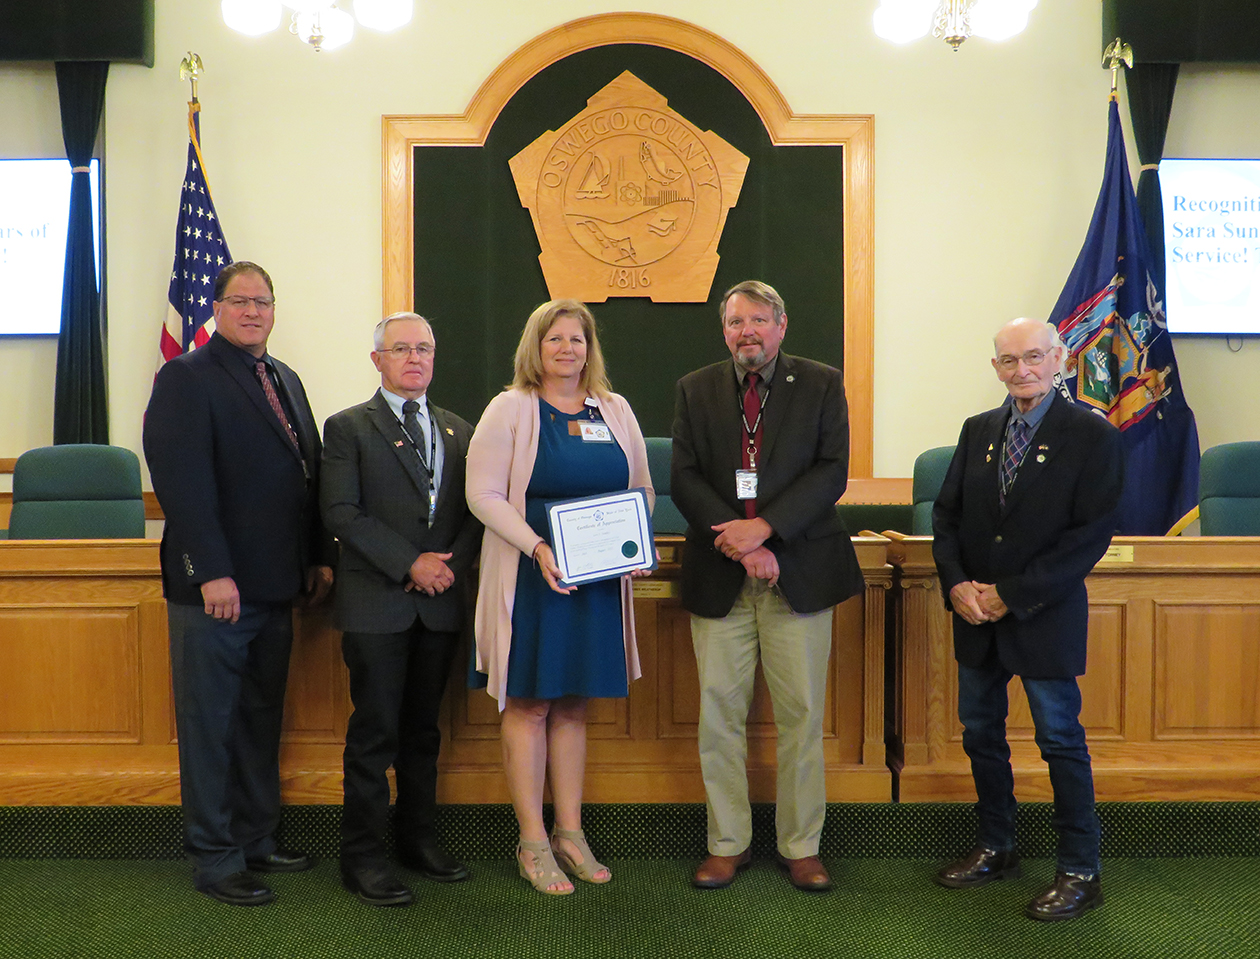 employee (Sara Sunday) receives certificate from legislators